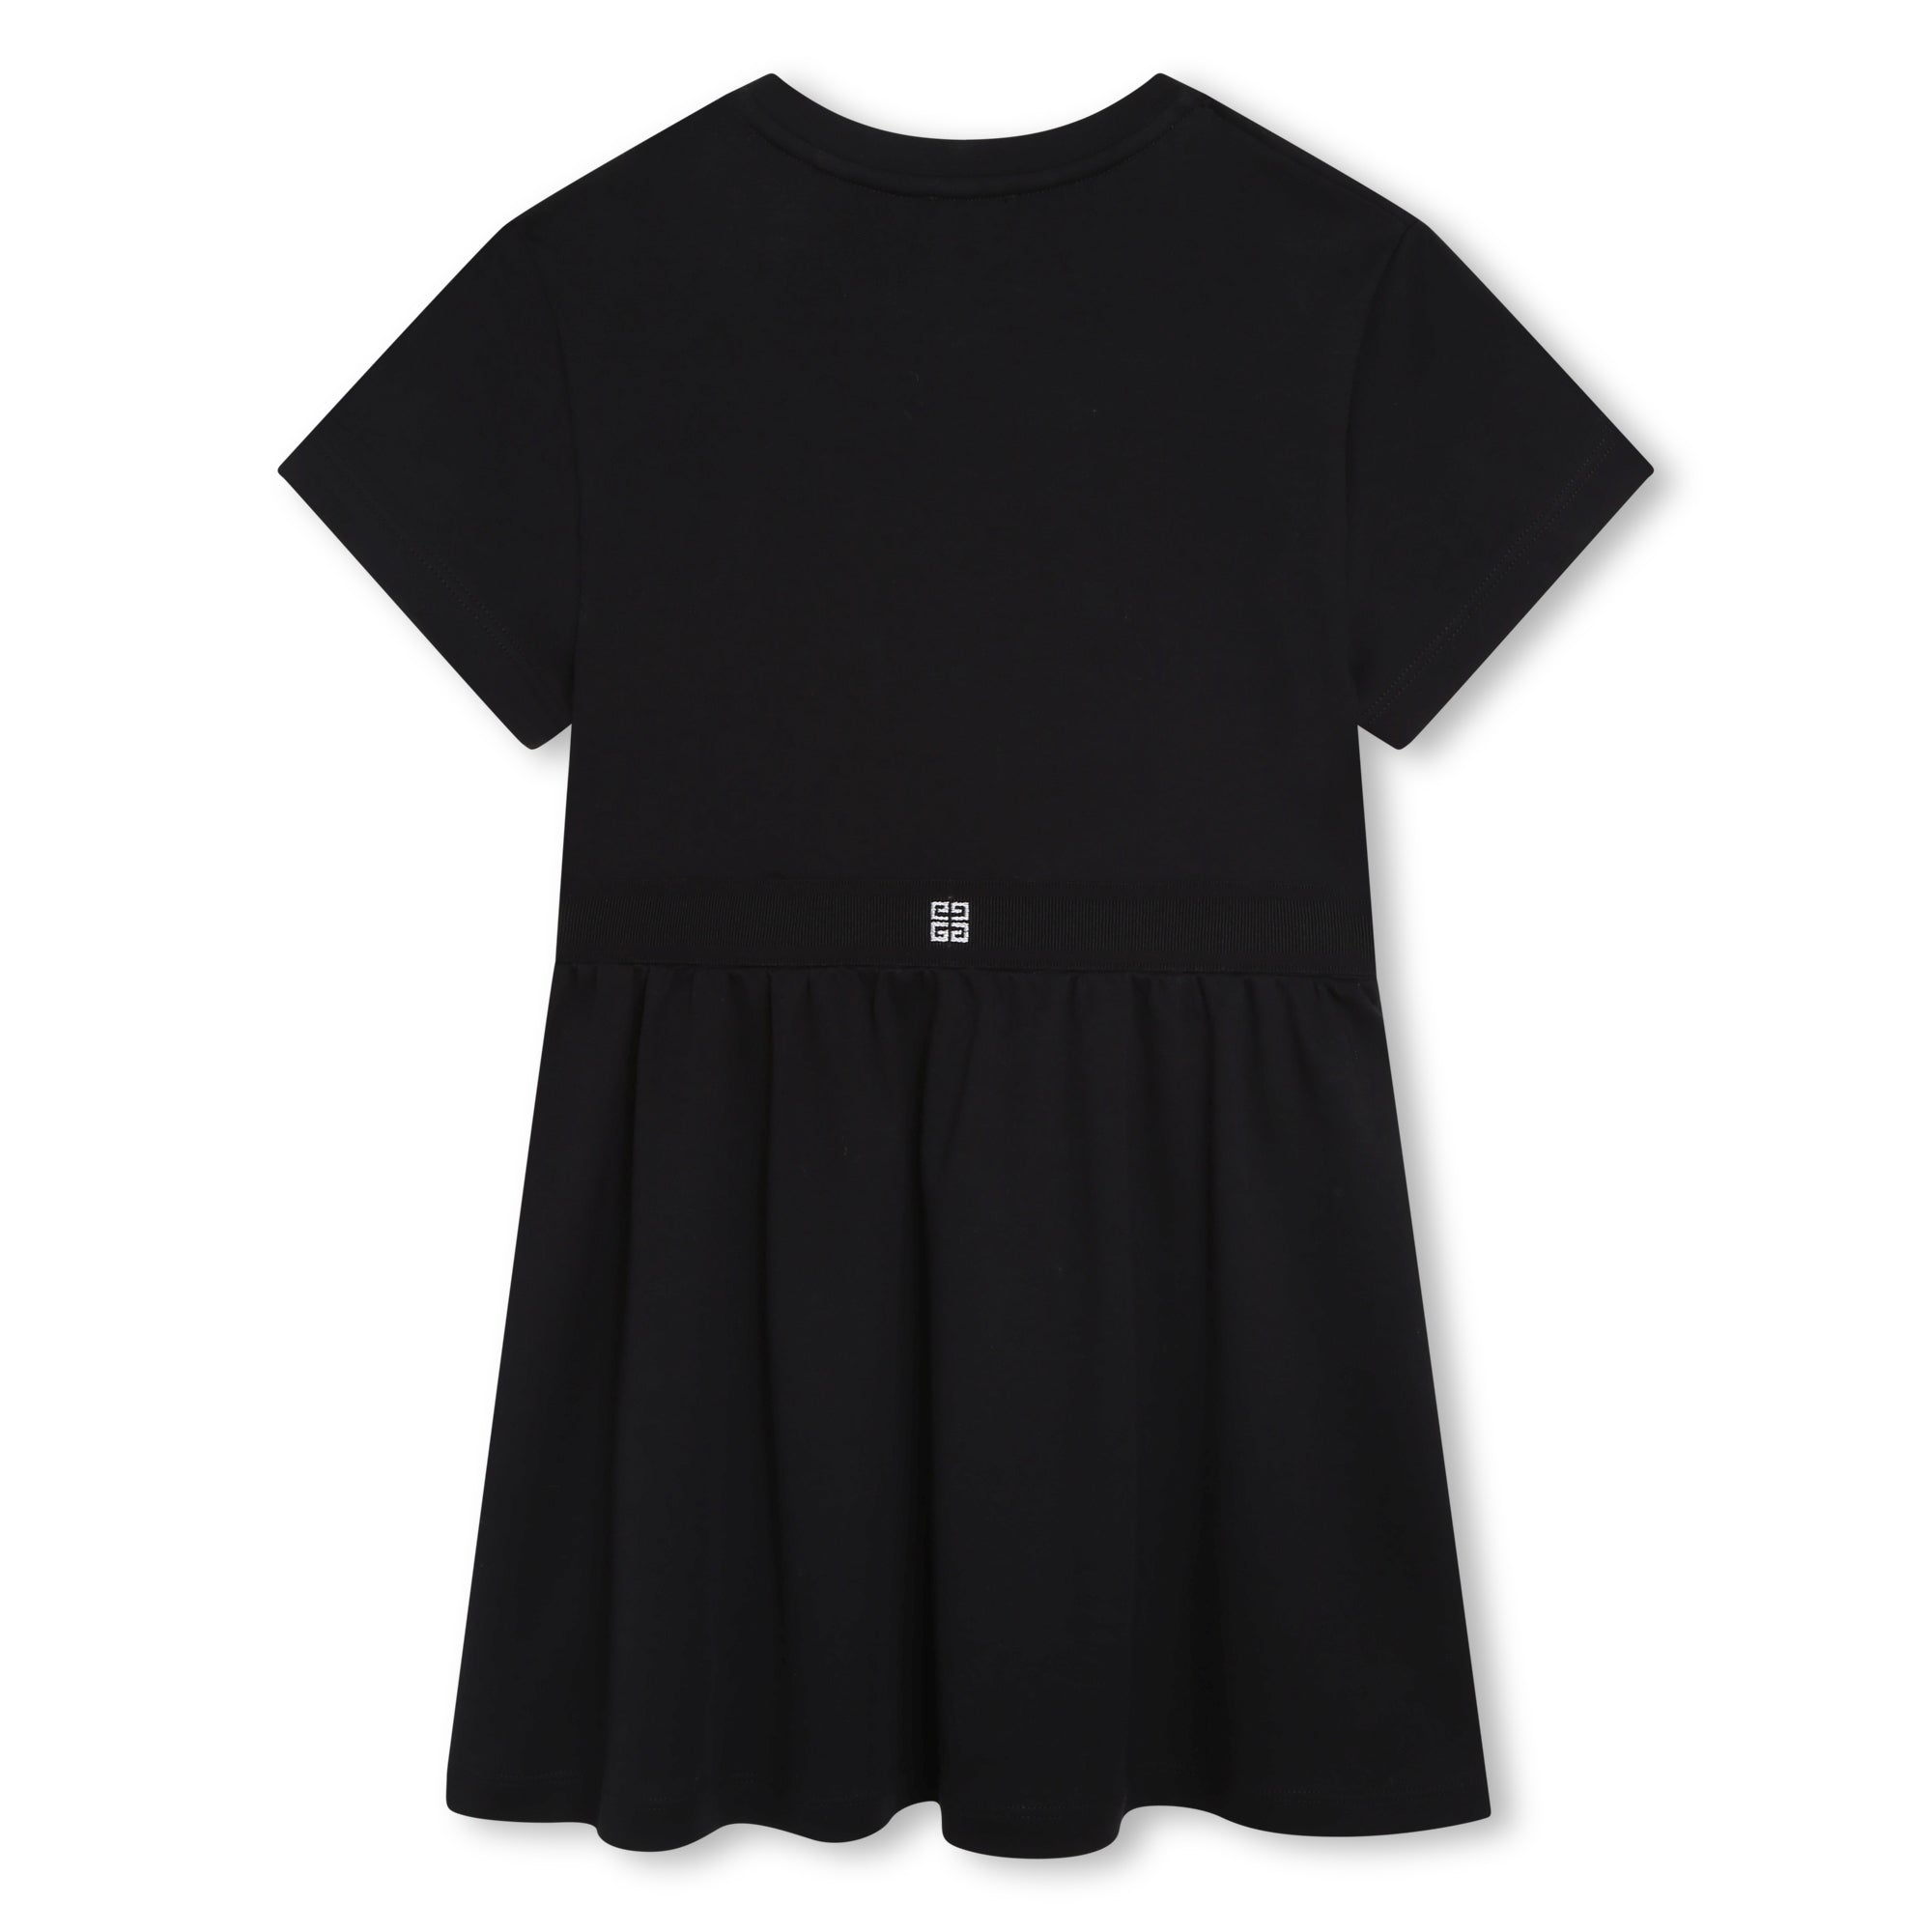 Givenchy Girls 4G Print Dress in Black